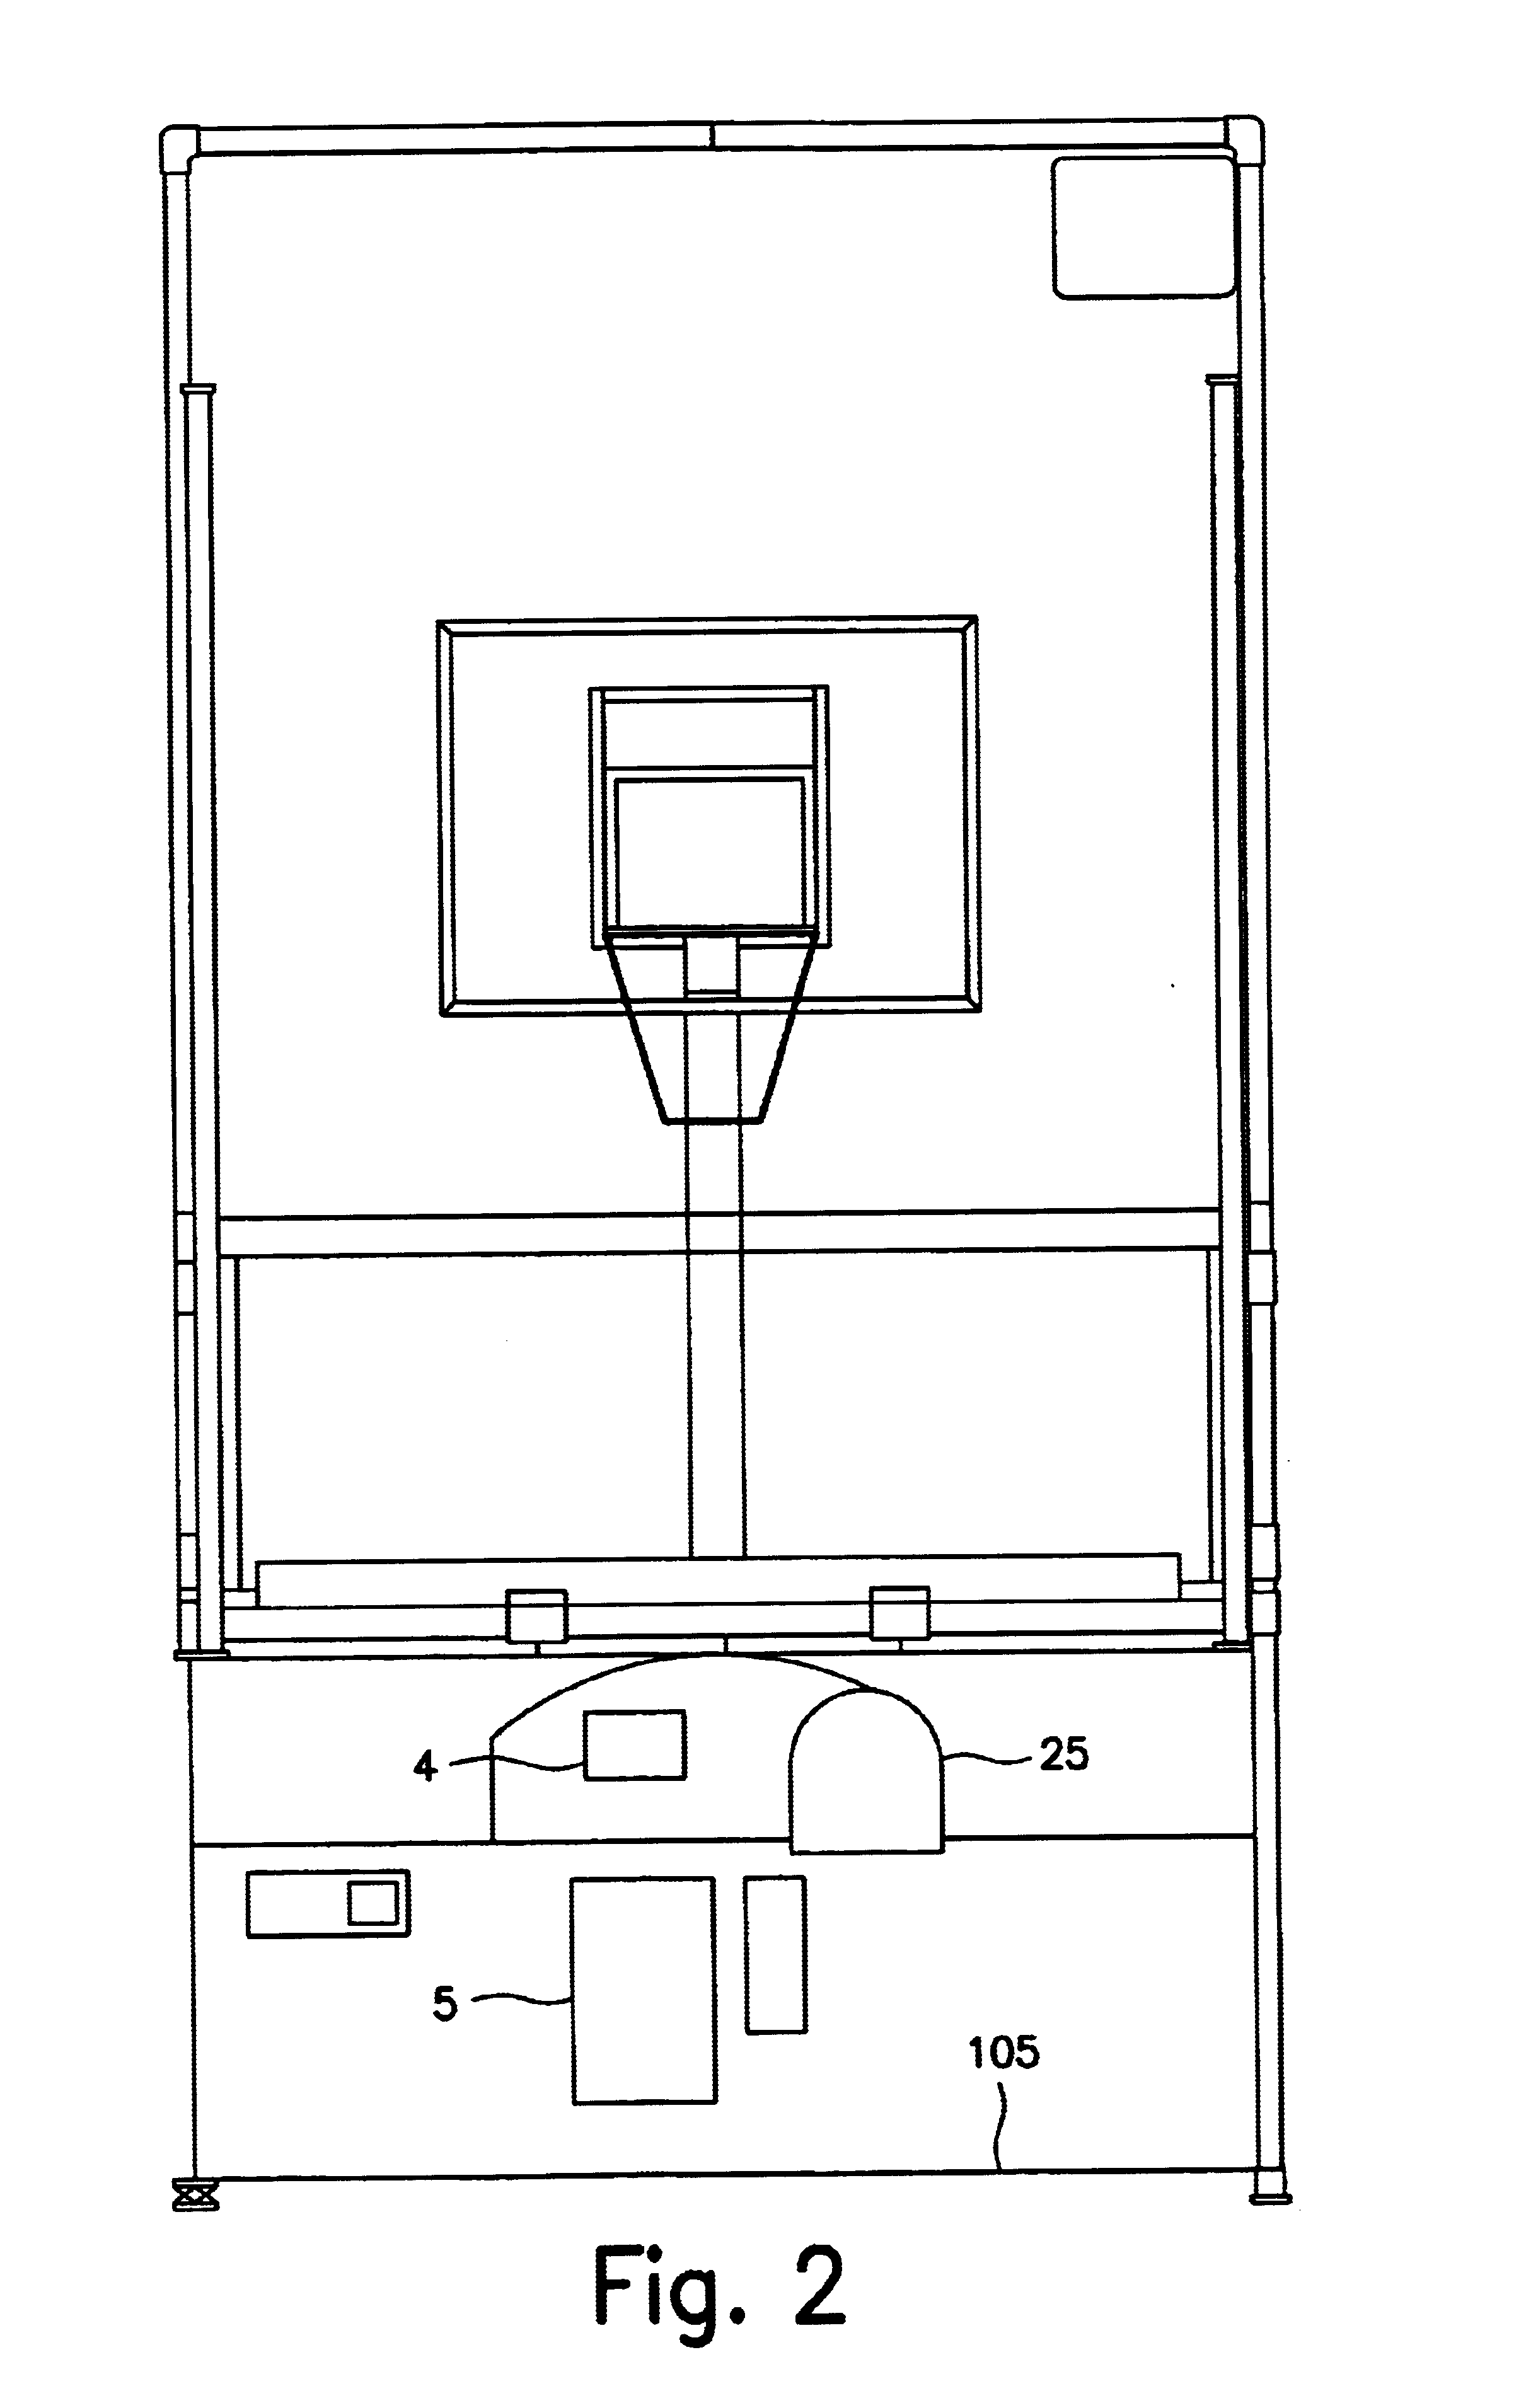 Adjustable basketball system and method